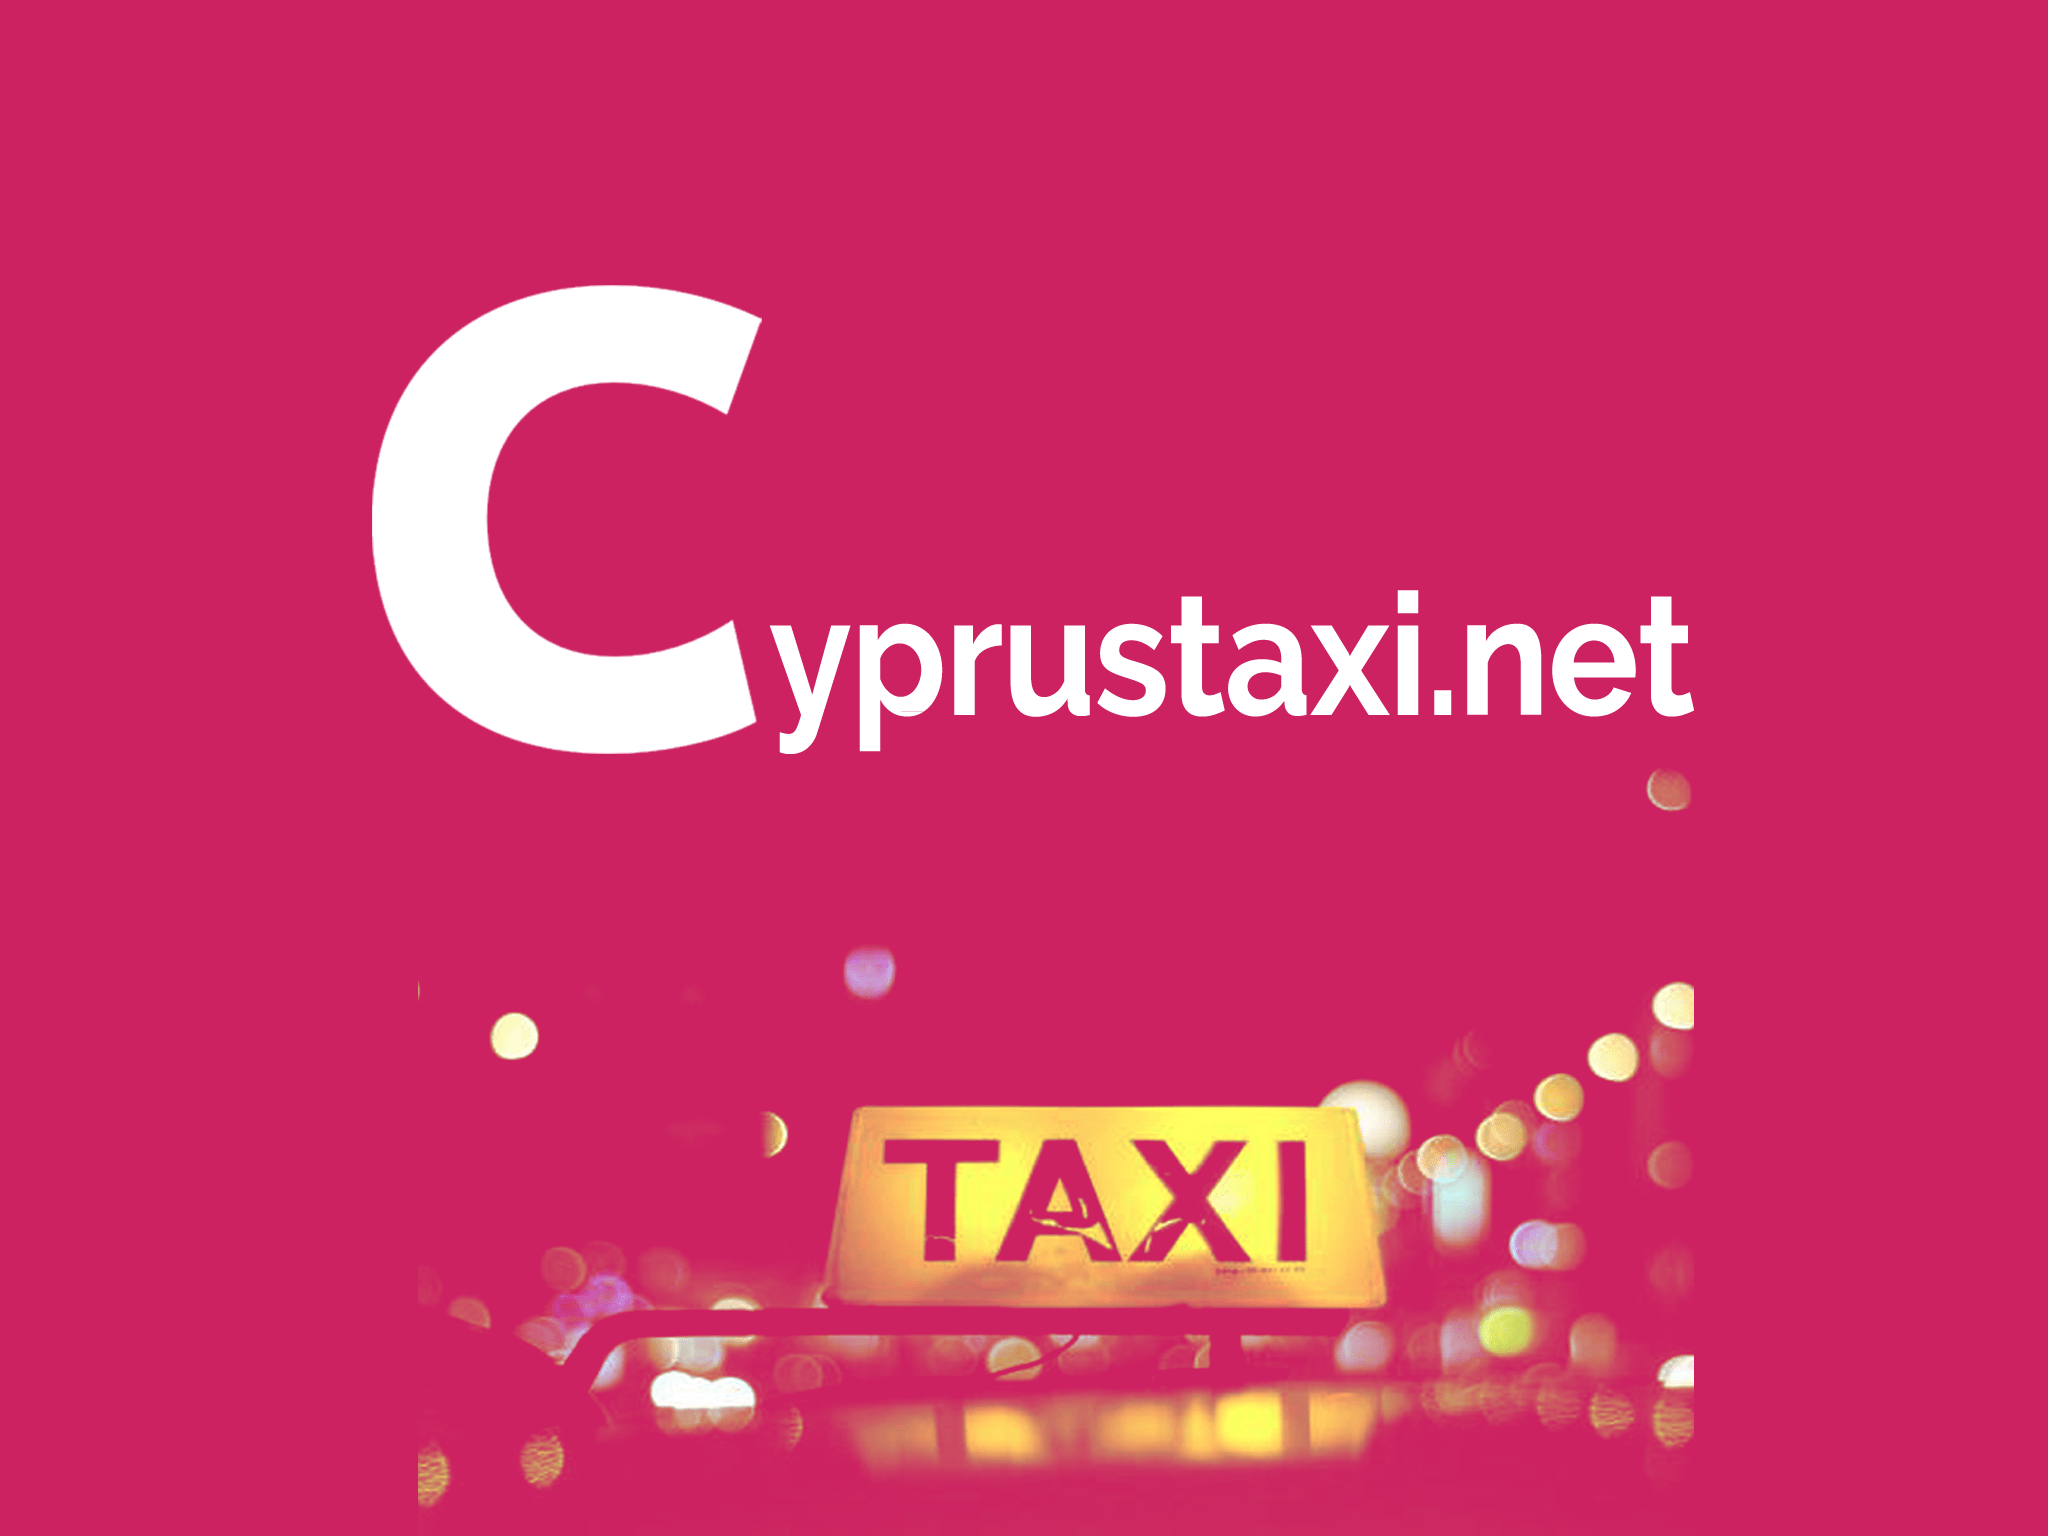 (c) Cyprustaxi.net